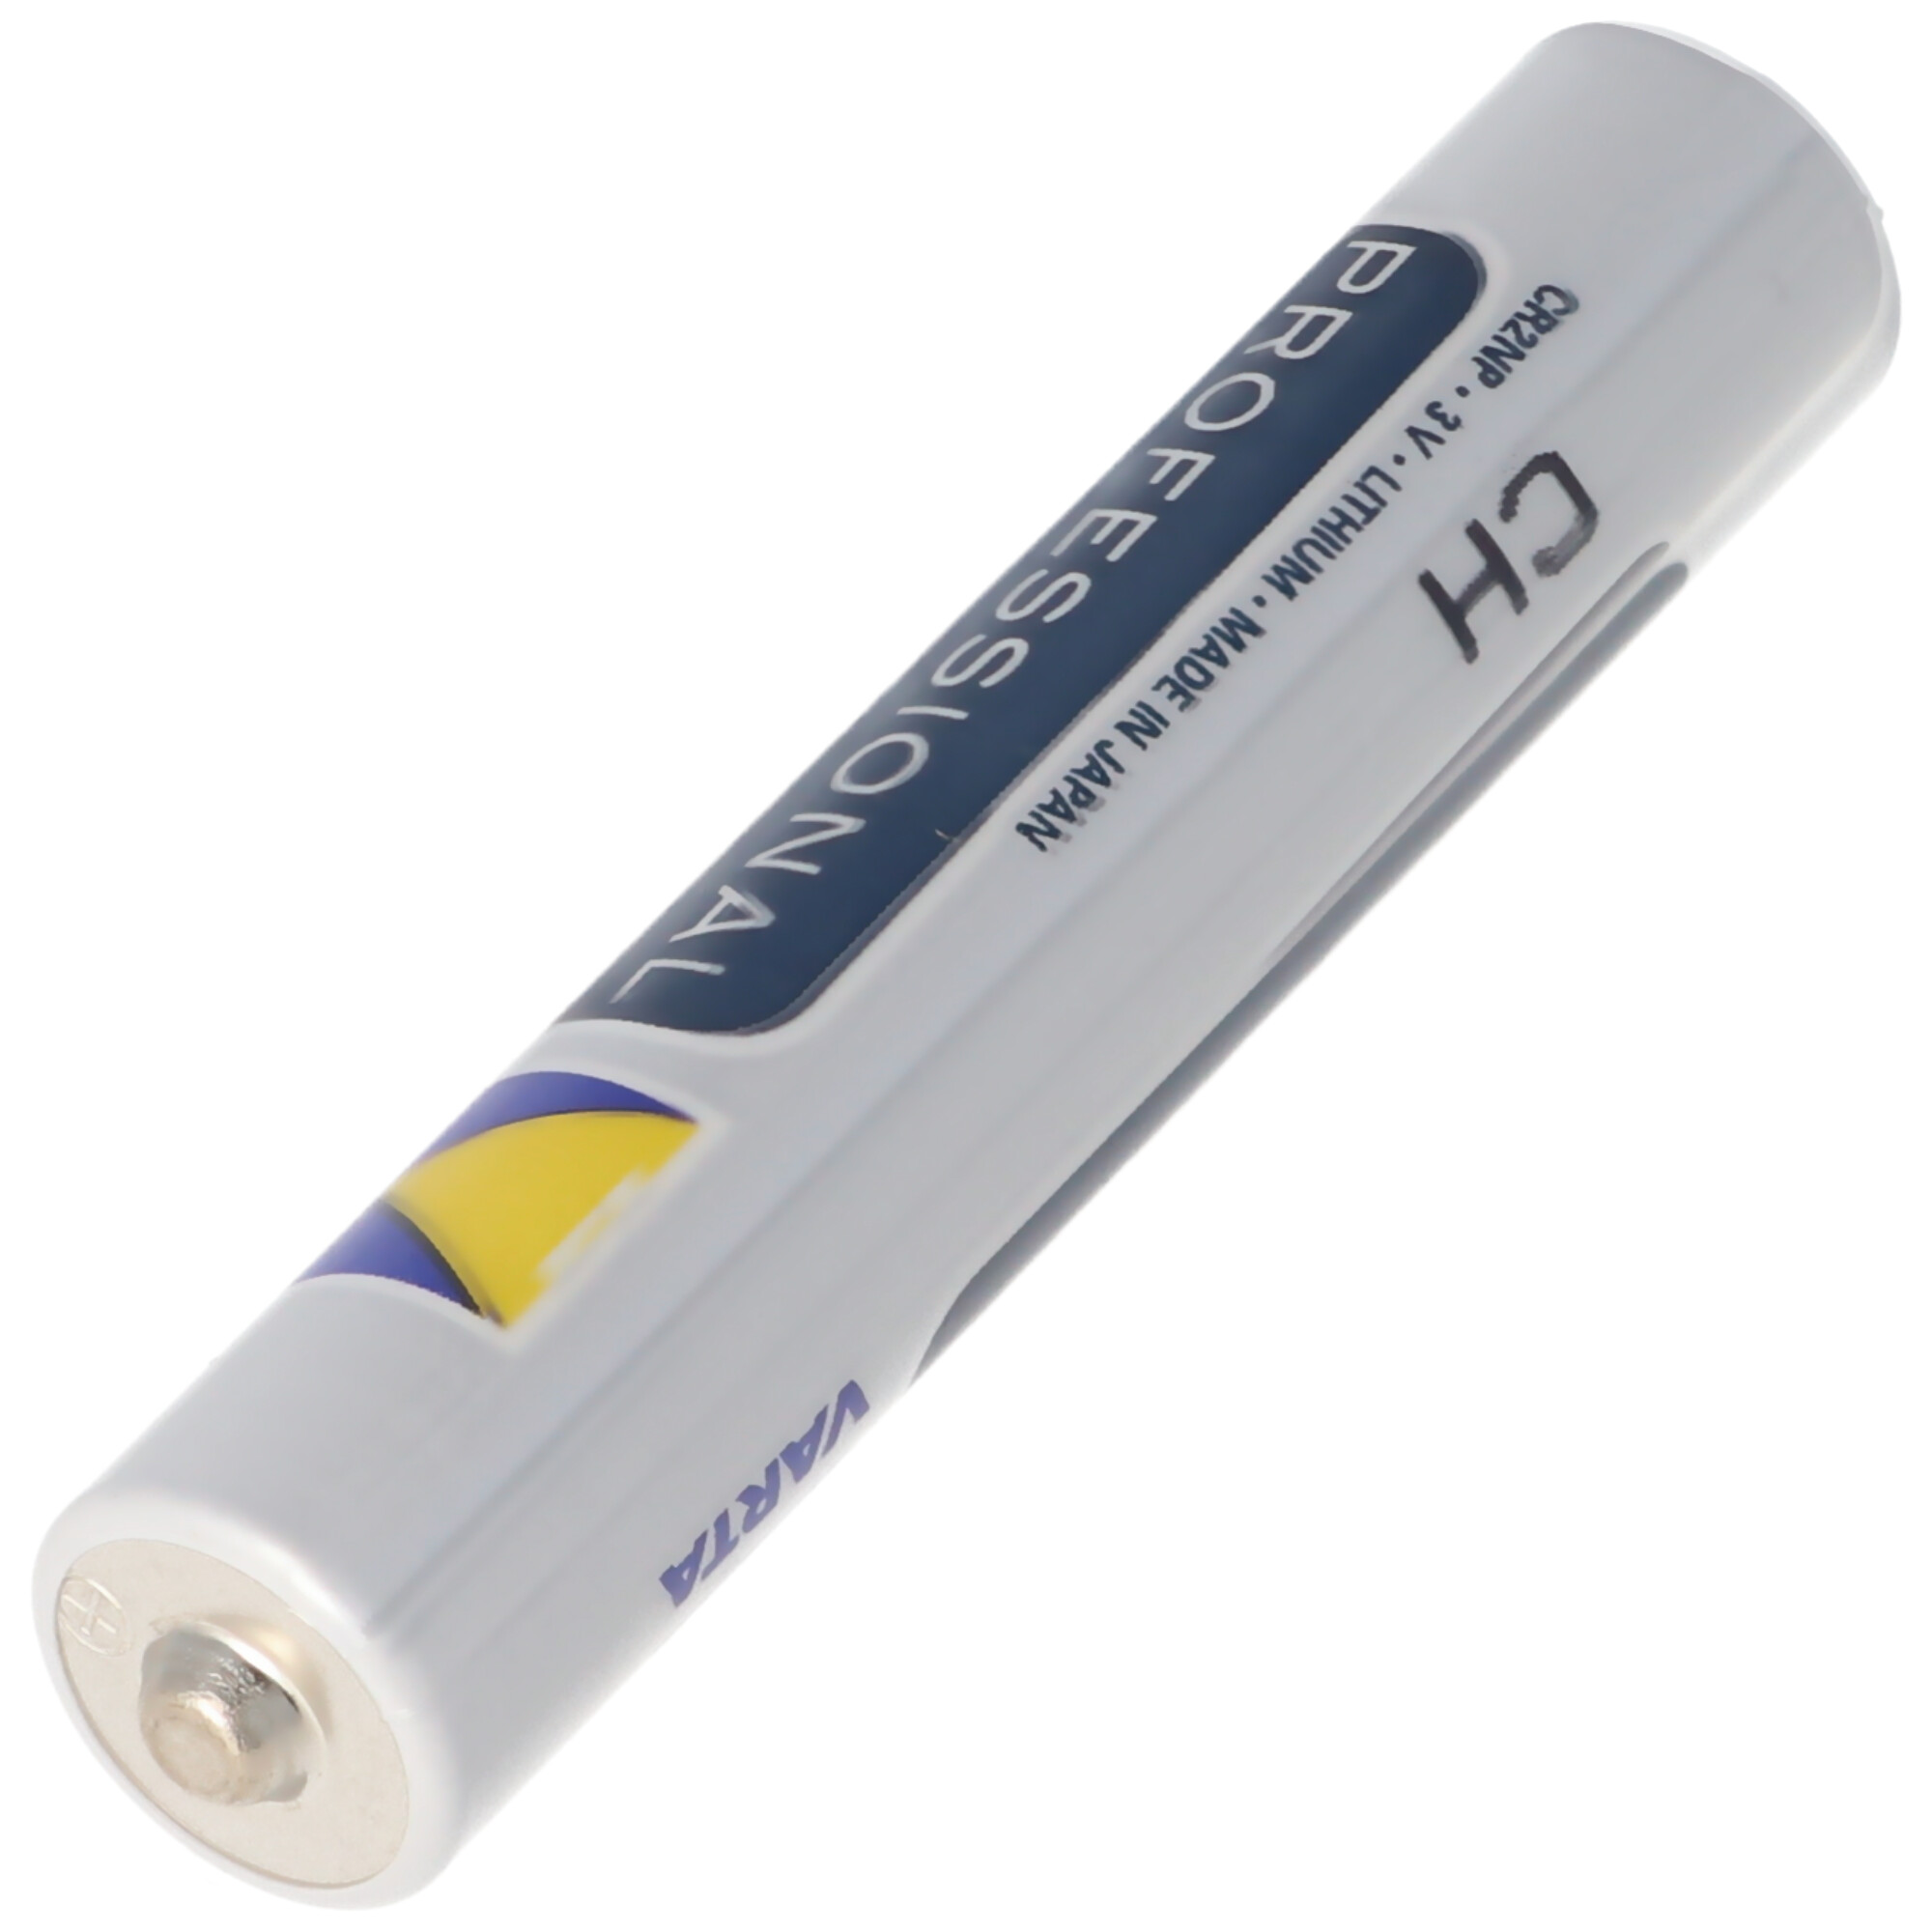 CR2NP Varta Lithium 3V Batterie CR2NP, CR 2NP Professional VKB 6202 101 501